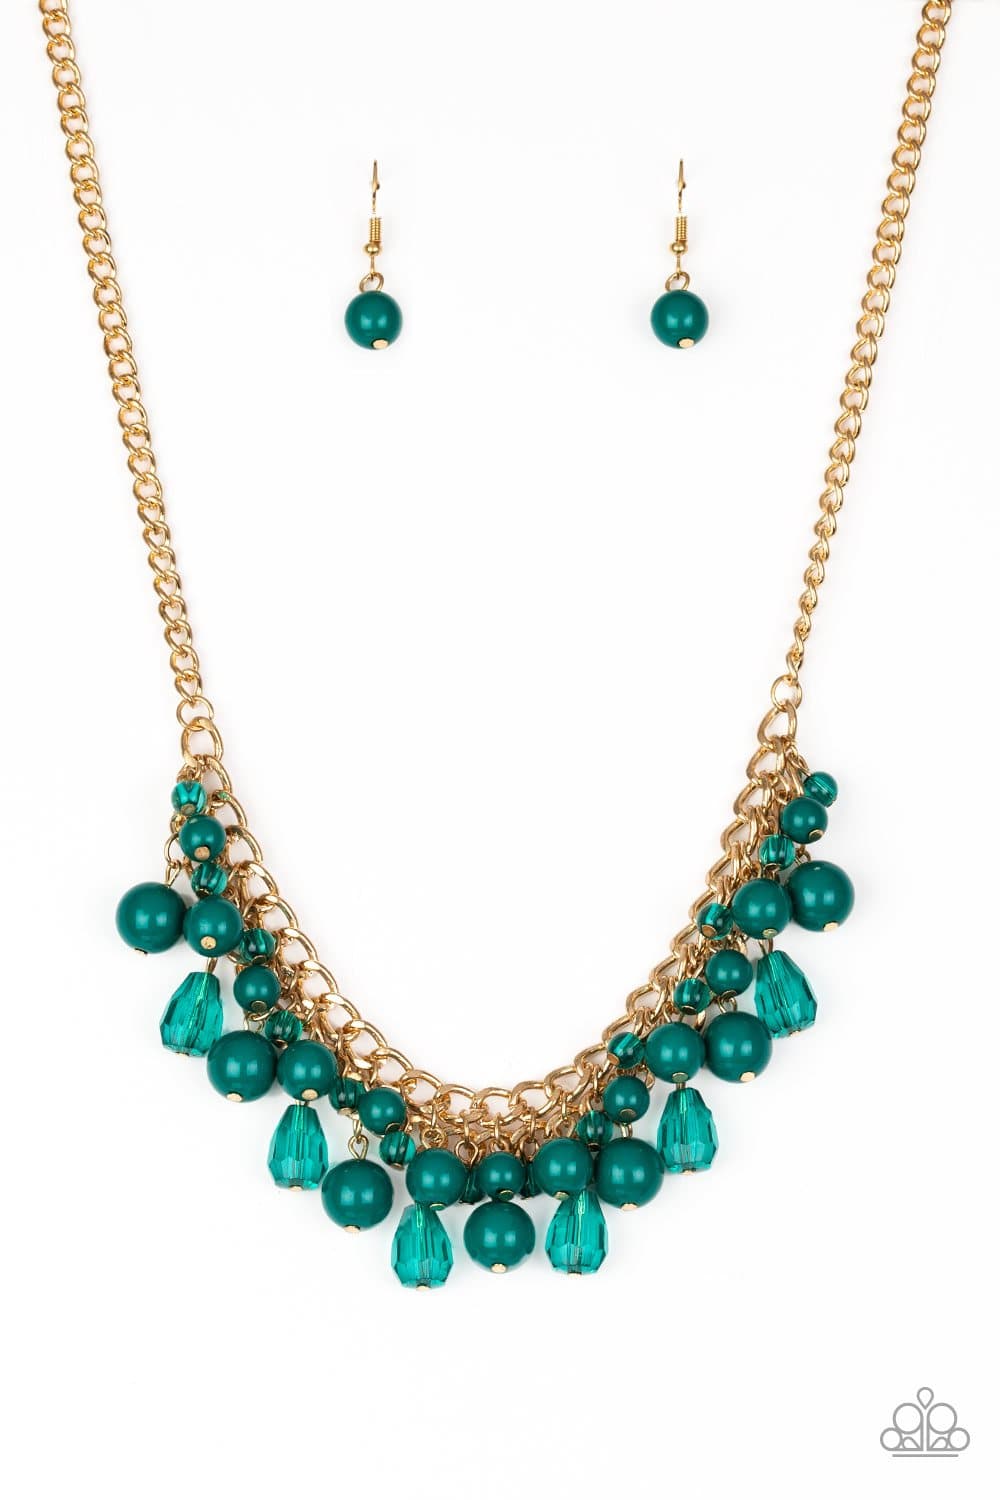 Tour de Trendsetter - Green & Gold Necklace - Paparazzi Accessories - GlaMarous Titi Jewels